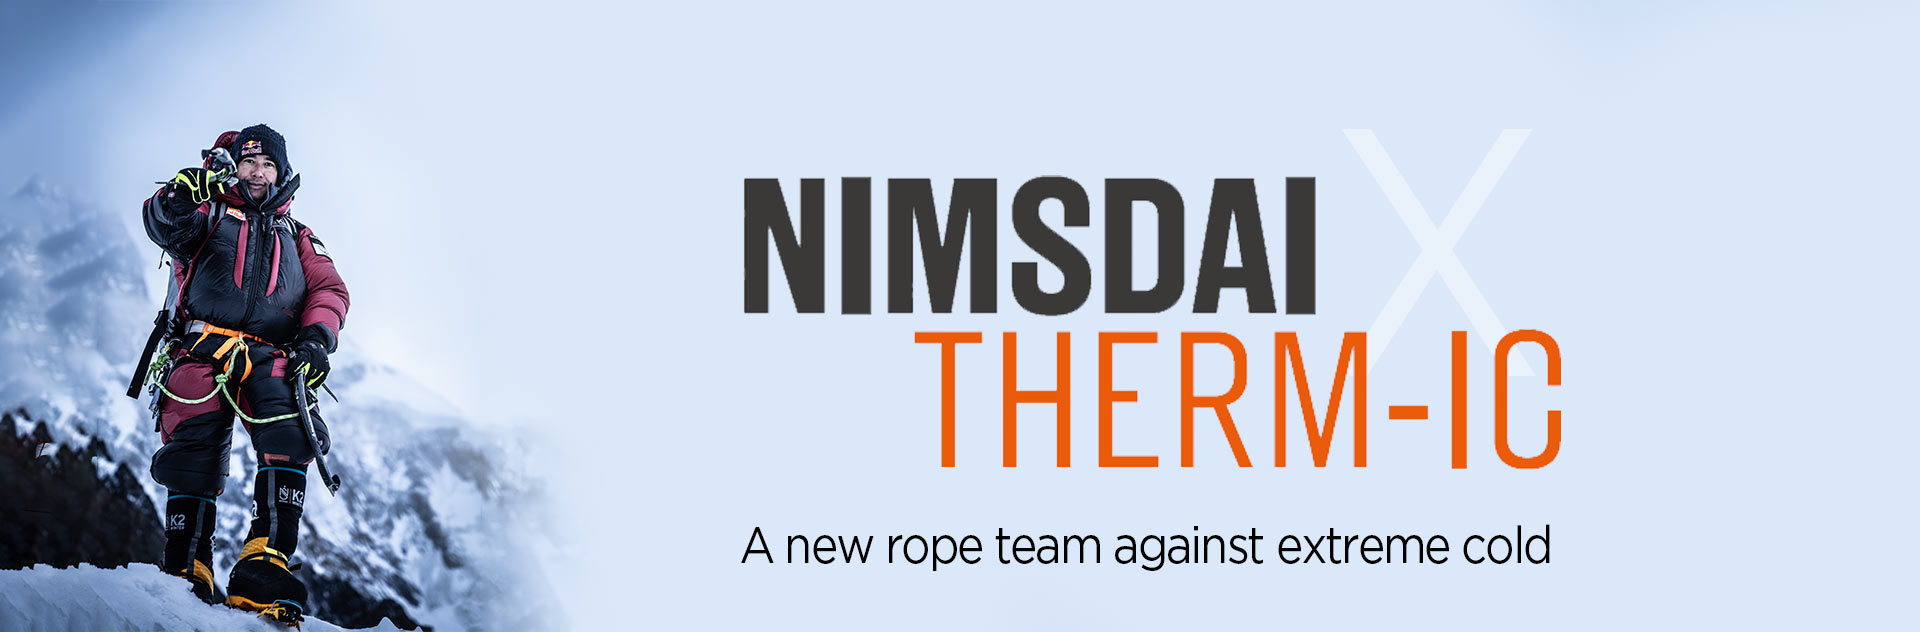 Nimsdai, Nirmal Purja, a new rope team against extreme cold